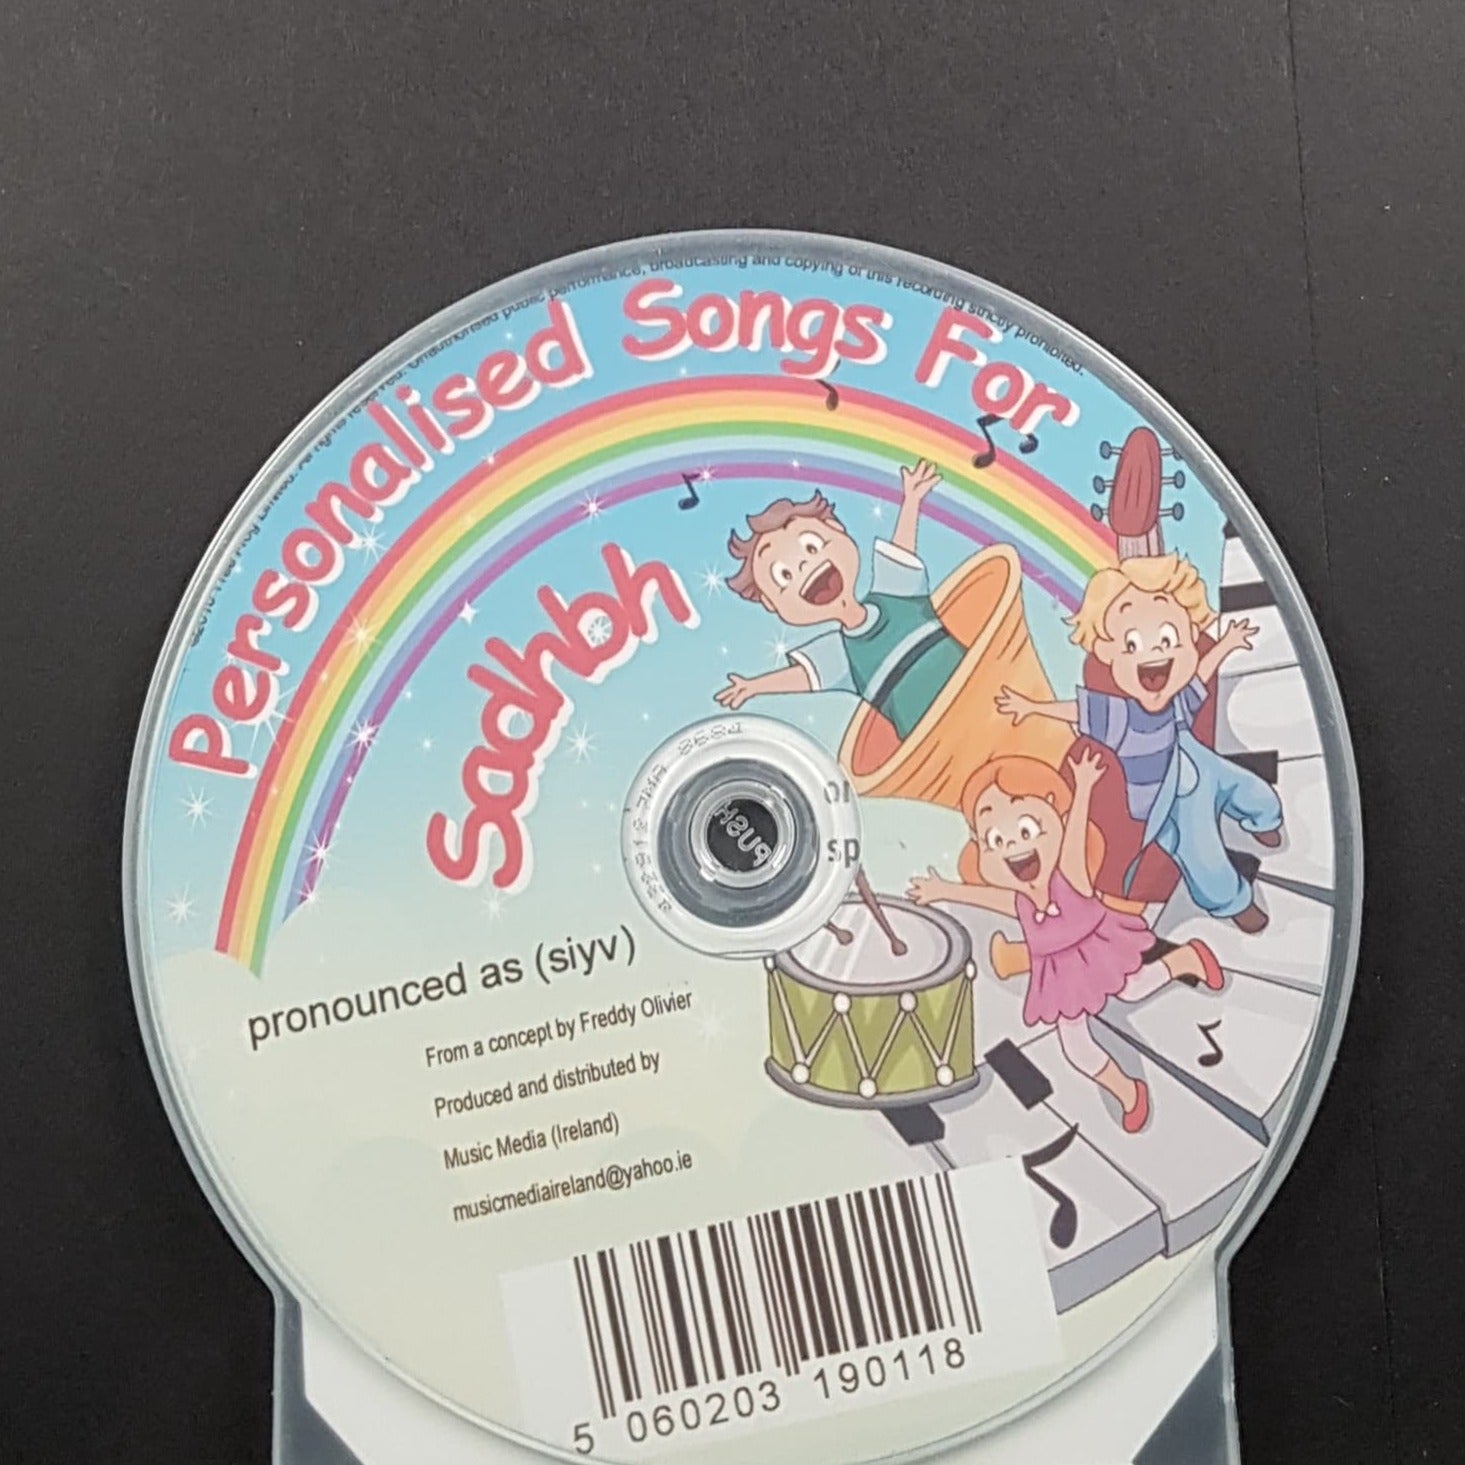 CD - Personalised Children's Songs / Sadhbh